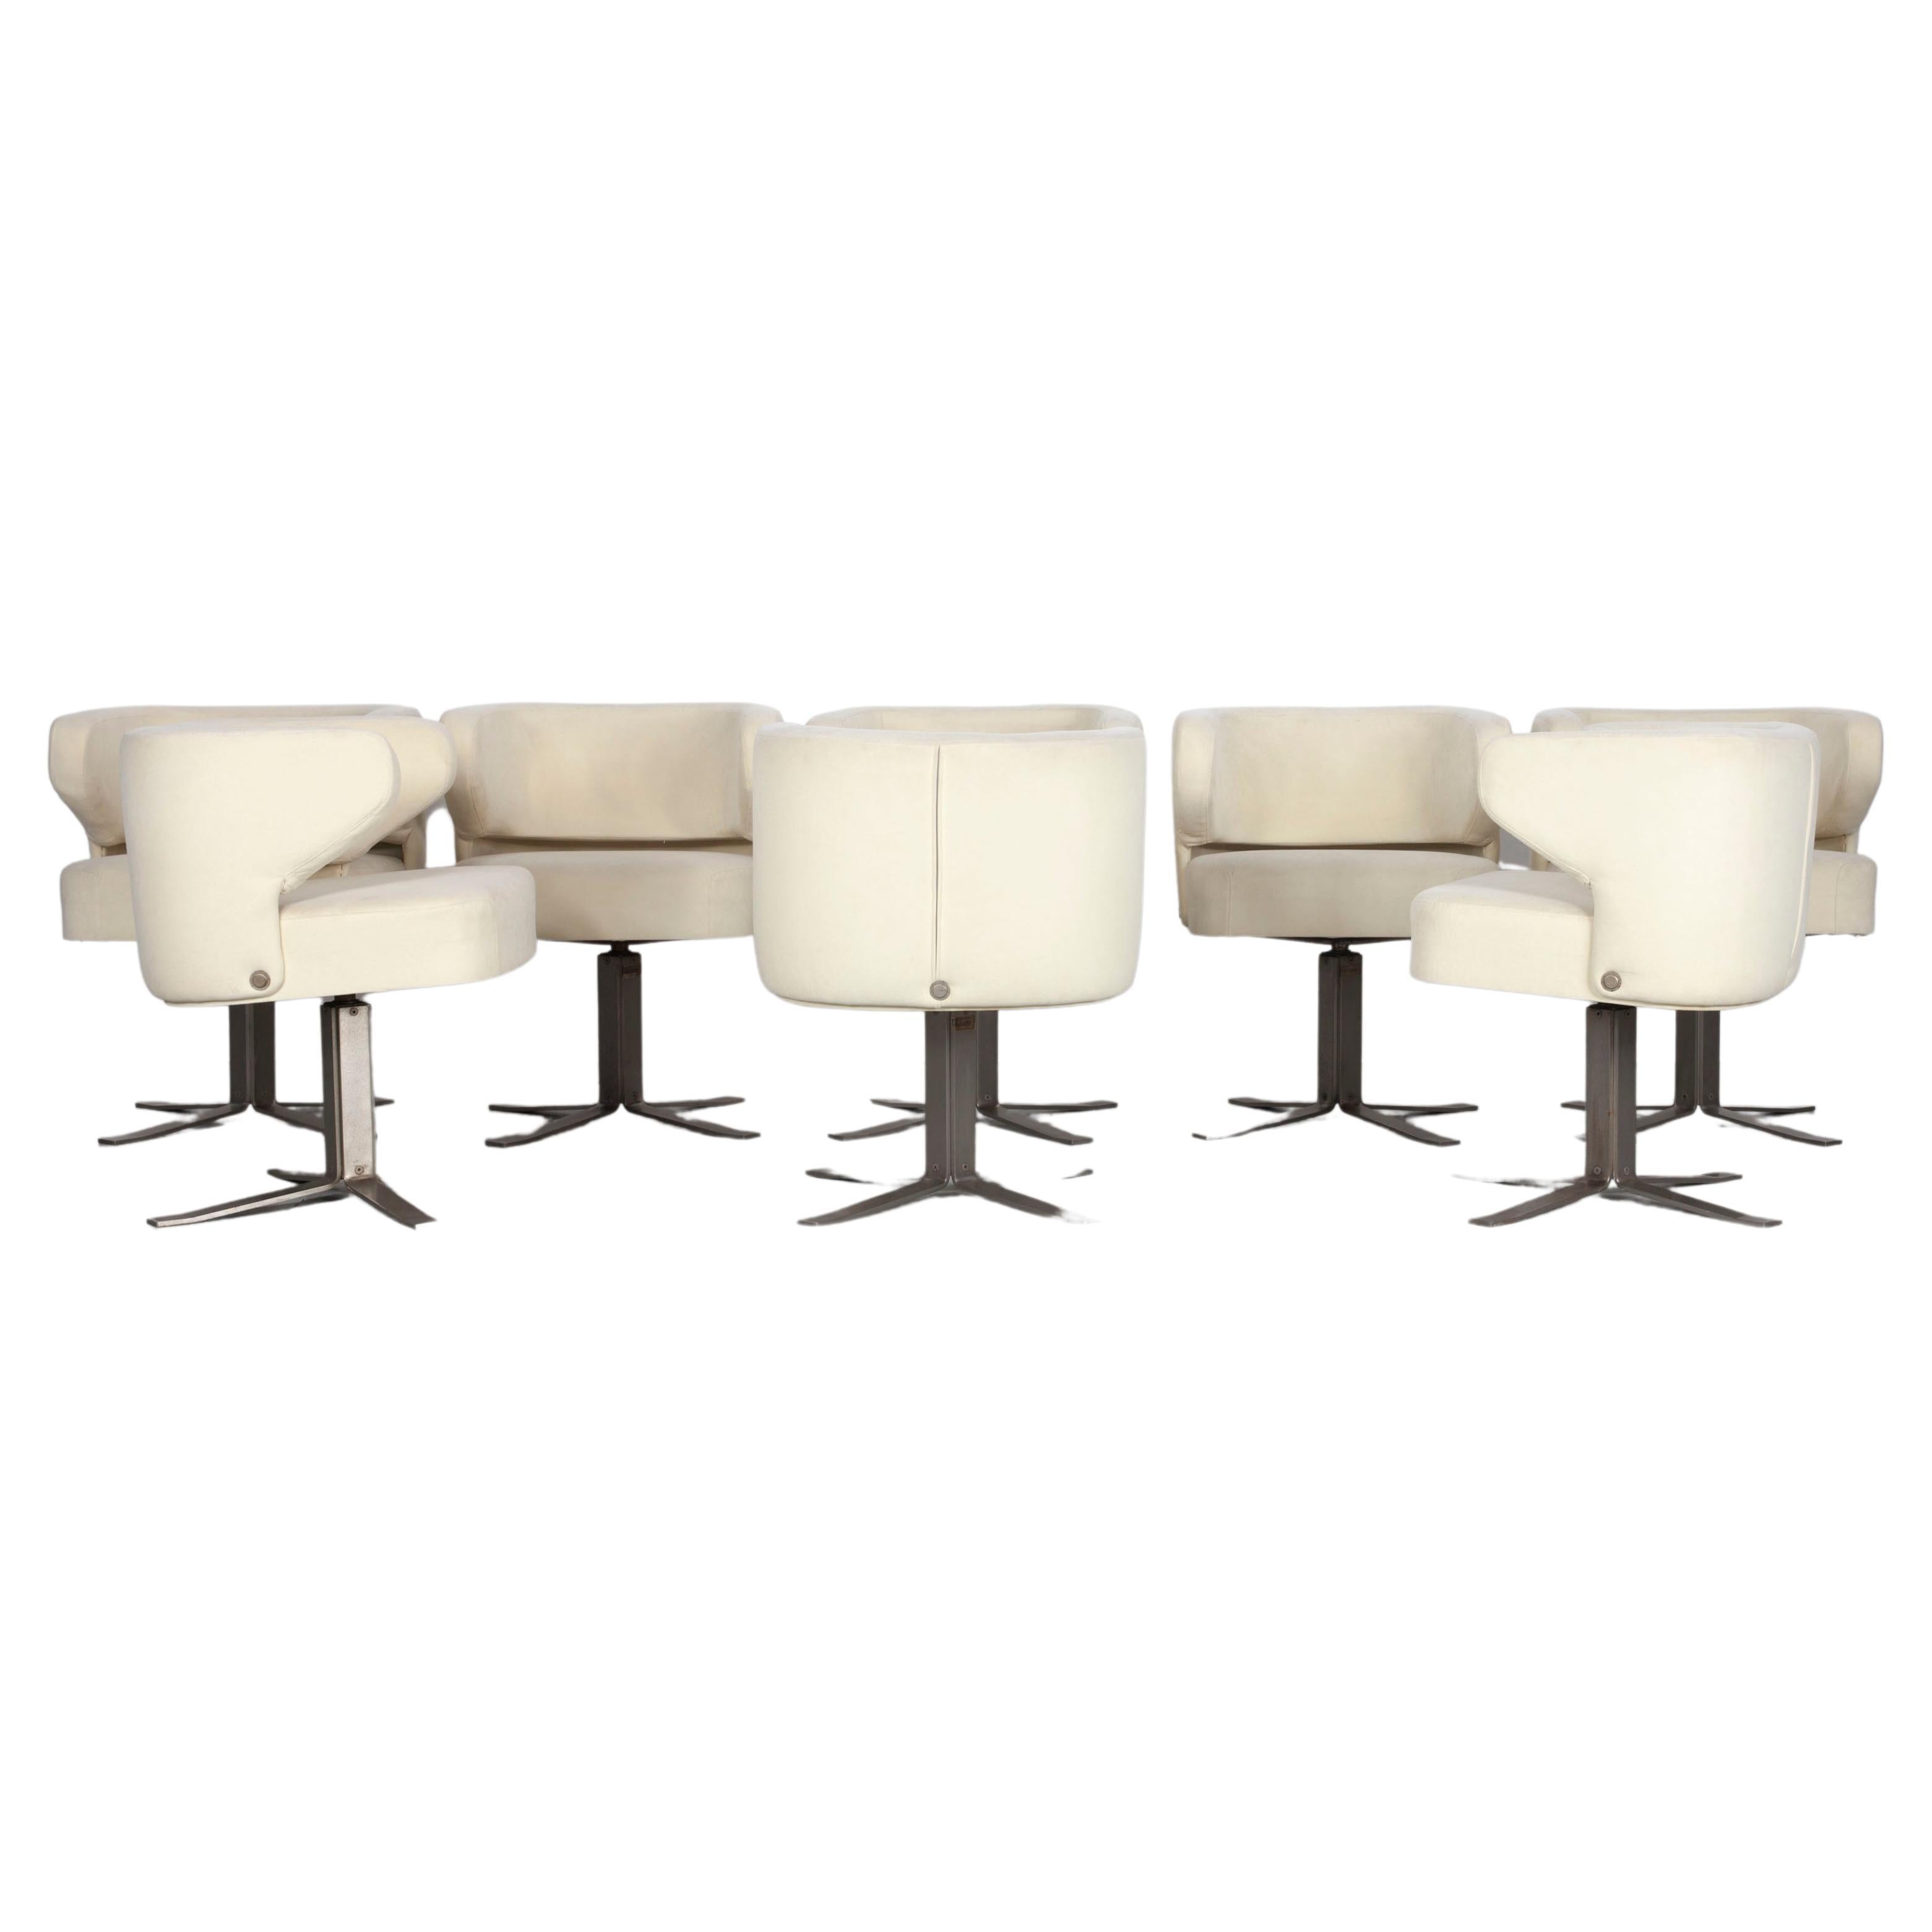 Set of 8 Formanova "Ponney" Swivel Chairs, Designed by Gianni Moscatelli, Italy